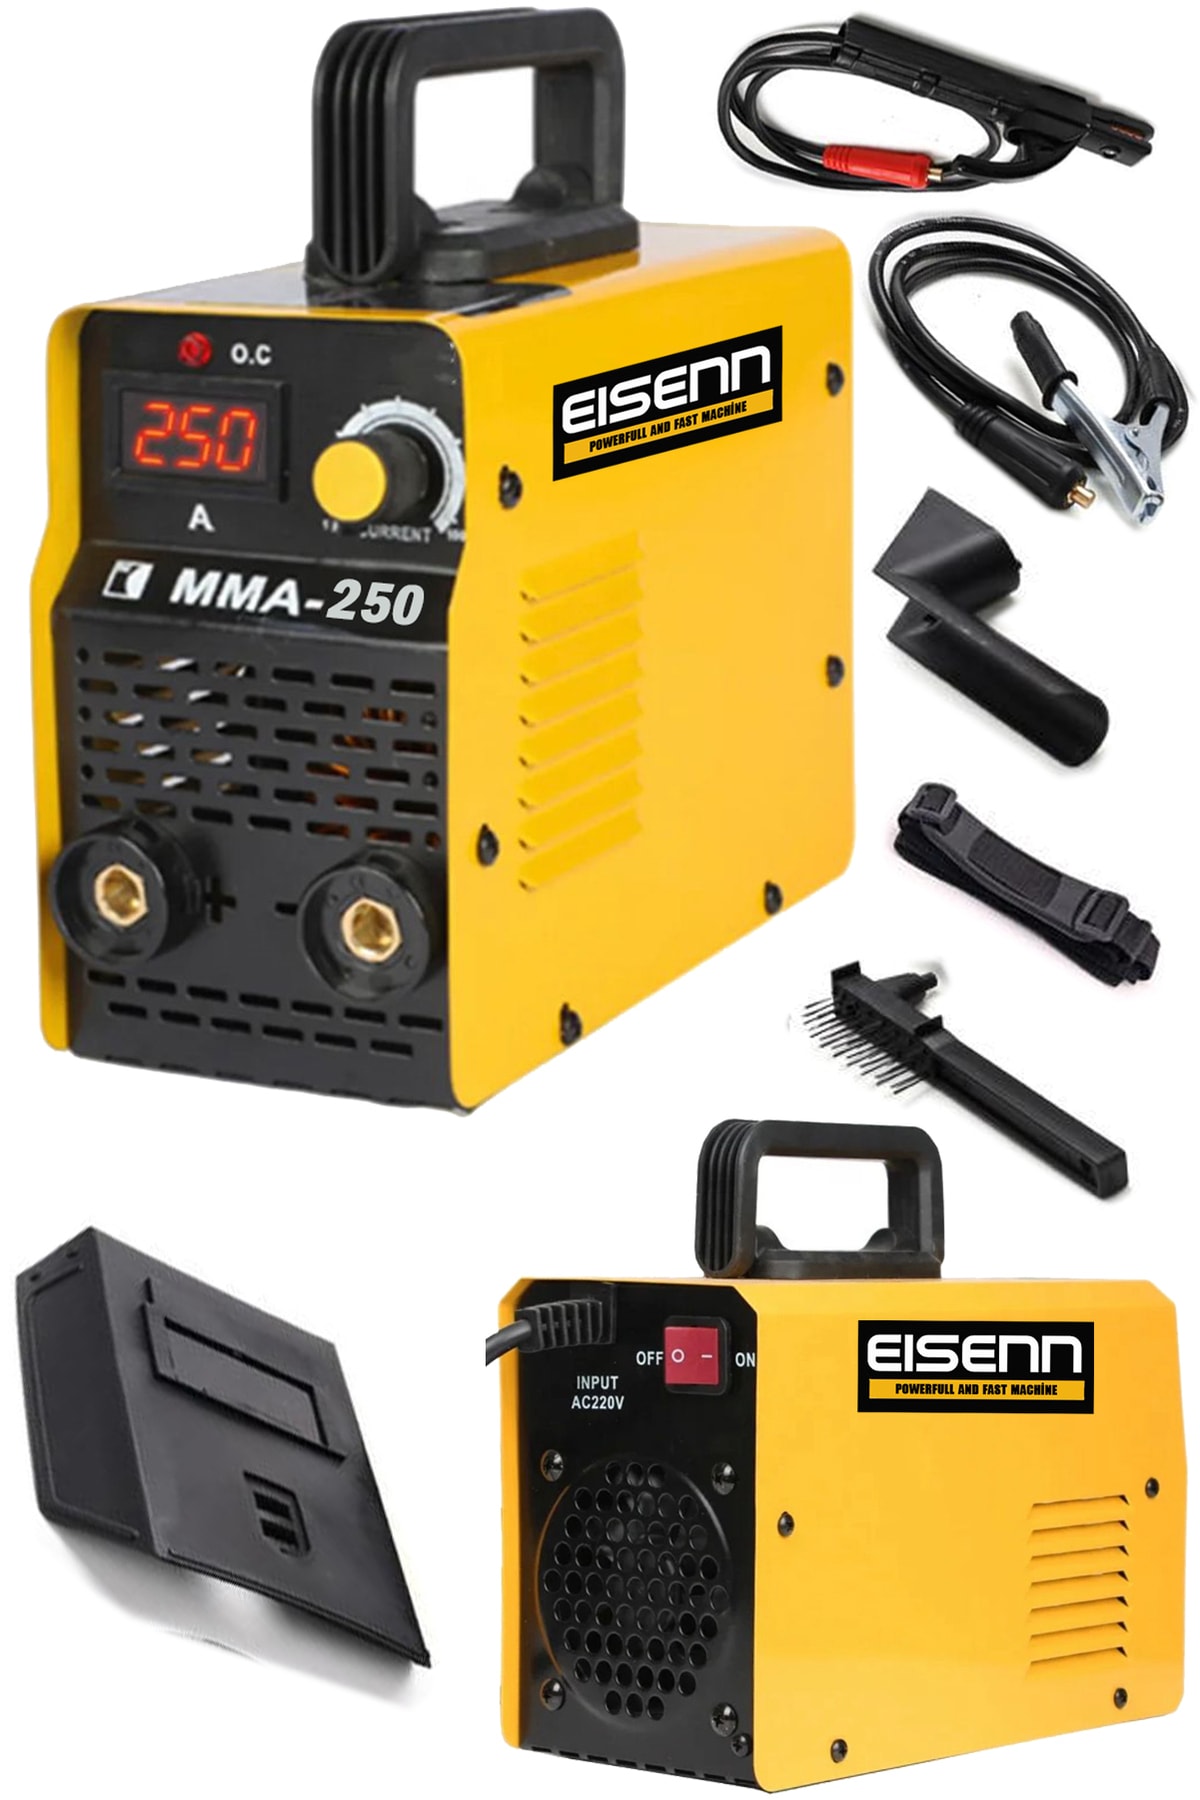 Eisenn Germany Technology Super Ultrasonıc 250 Amp Dijital Invertör Kaynak Makinası